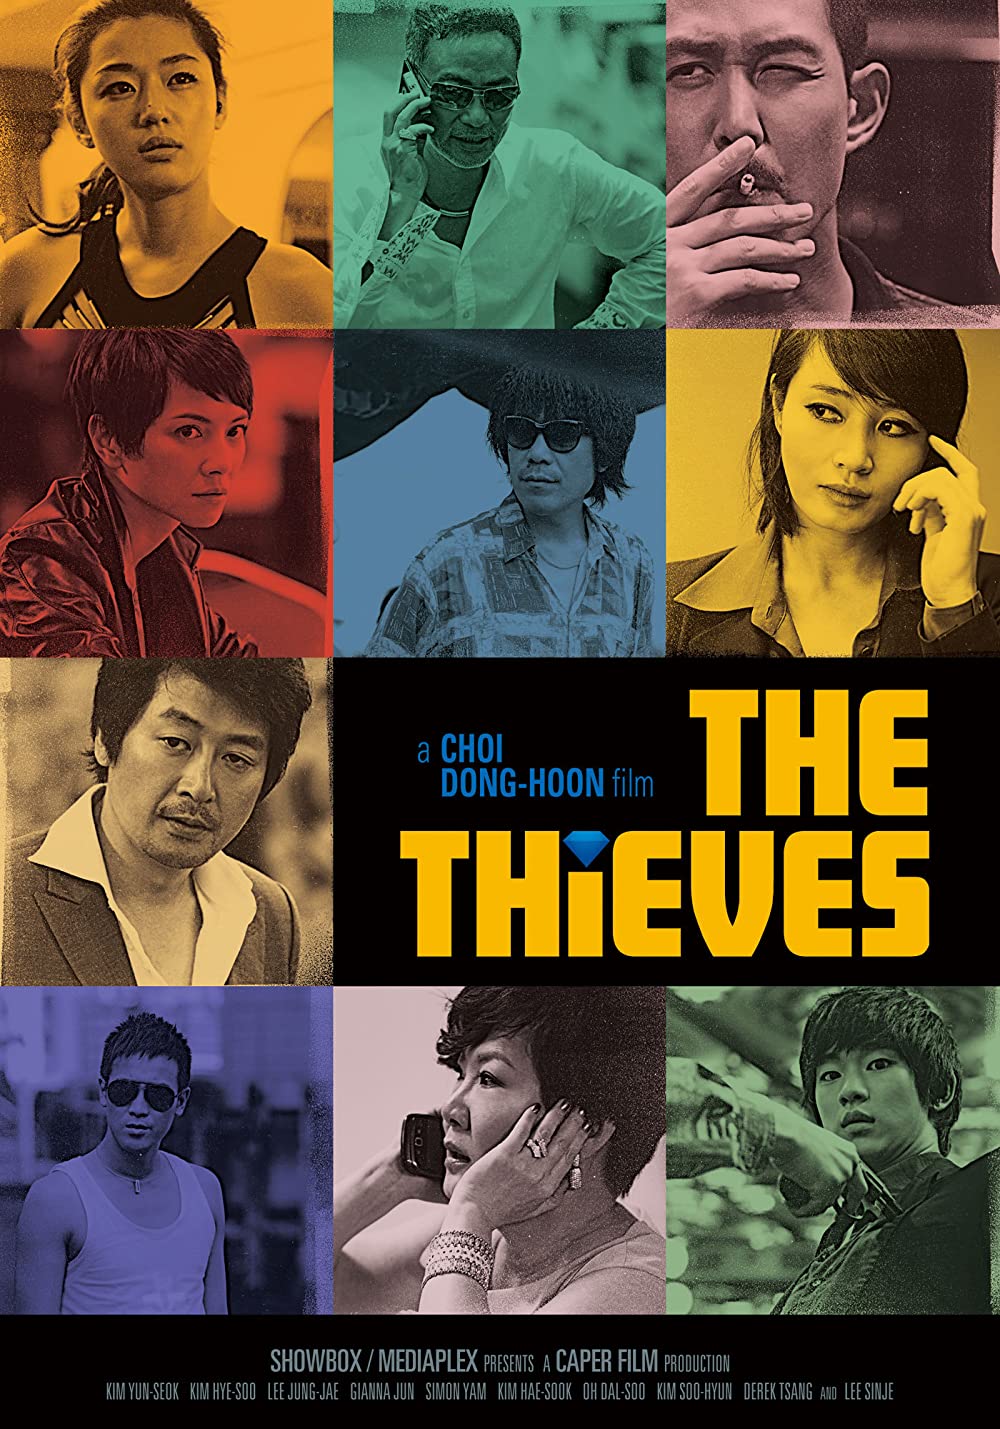 The Thieves 10 ดาวโจรปล้นโคตรเพชร (2012)